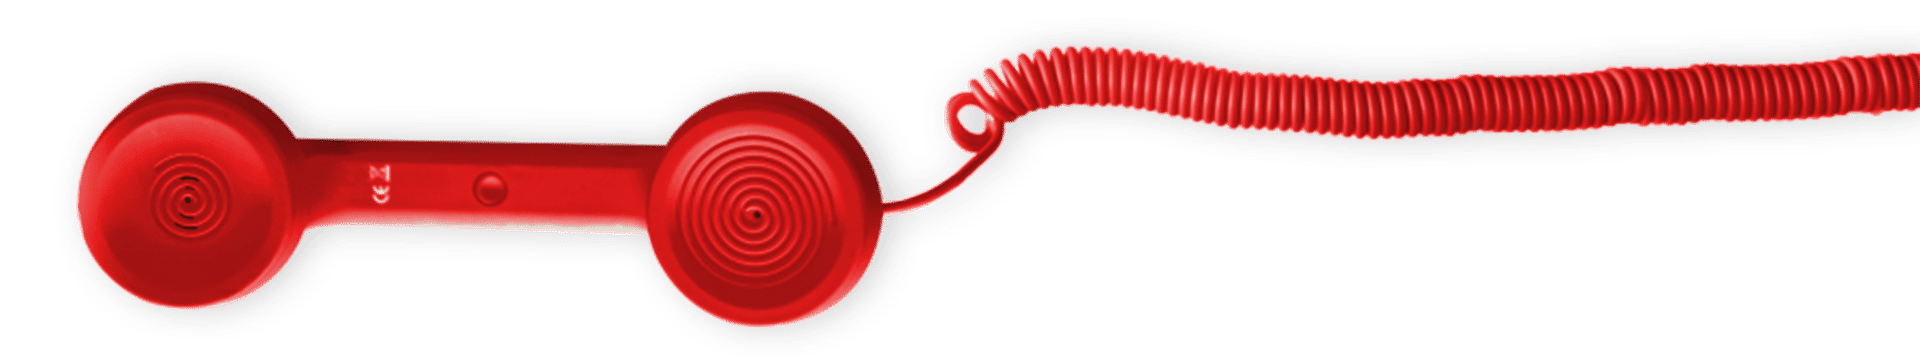 Rode telefoon